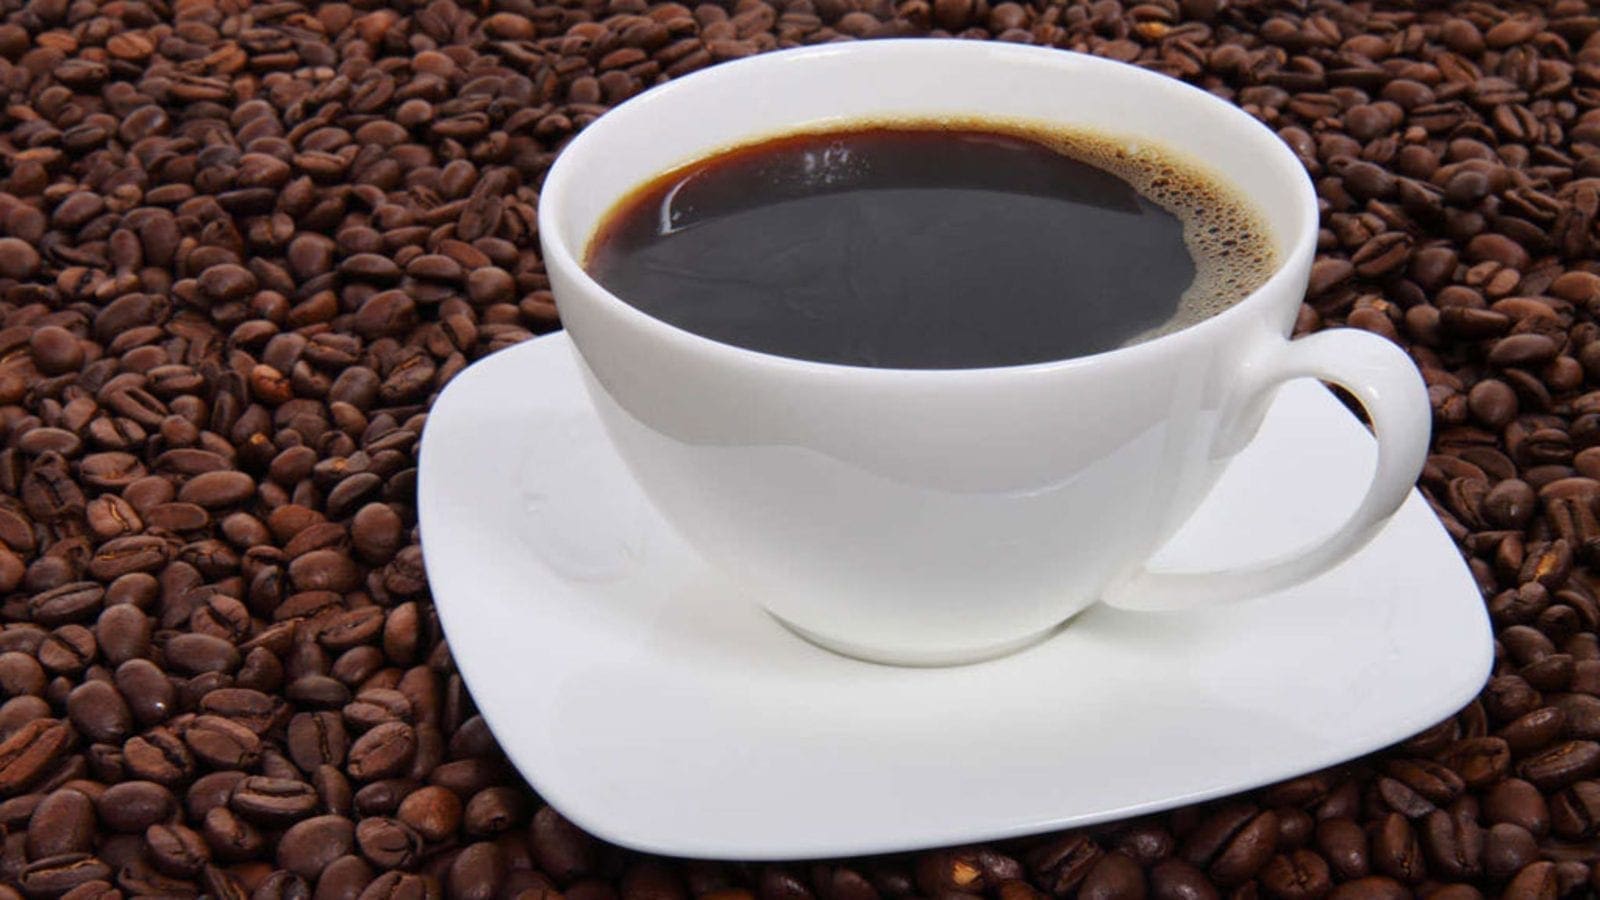 Food tech startup Atomo develops technology to brew coffeeless coffee